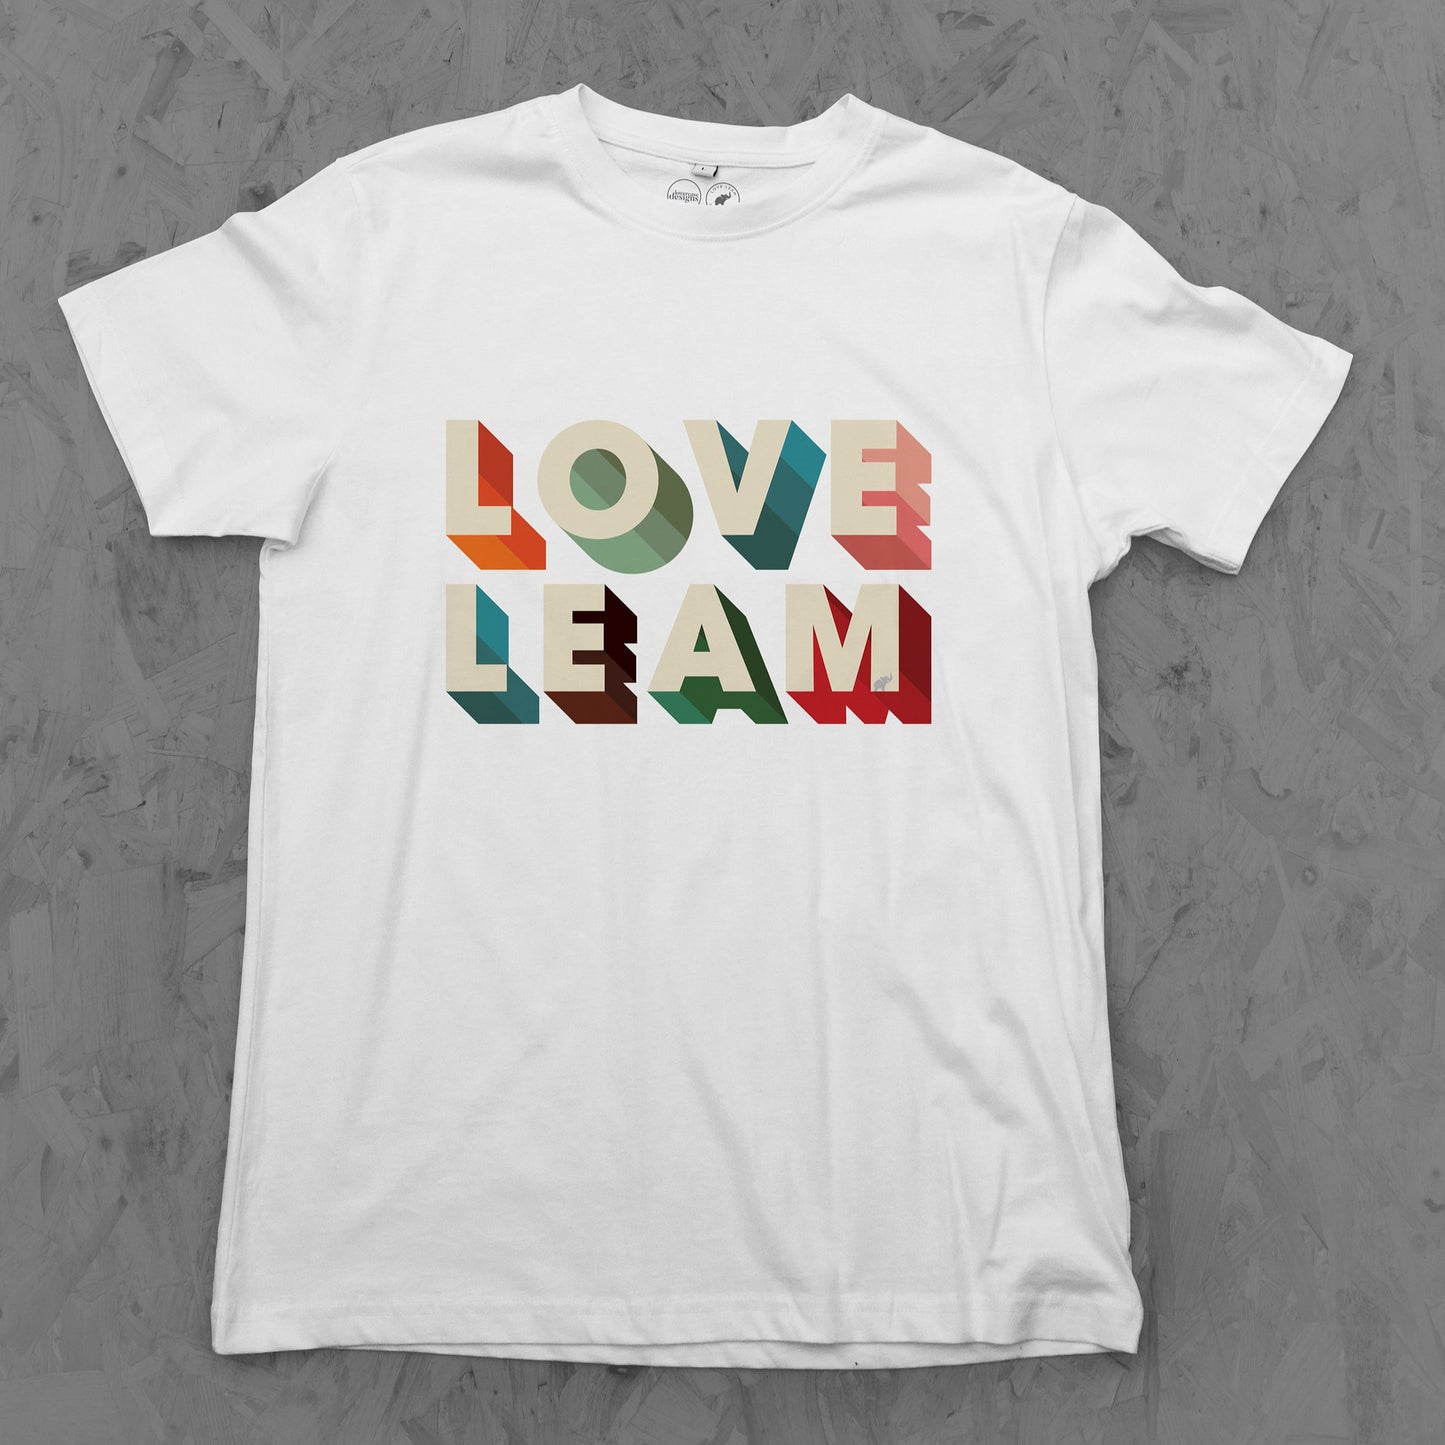 Love Leam 3 Tee